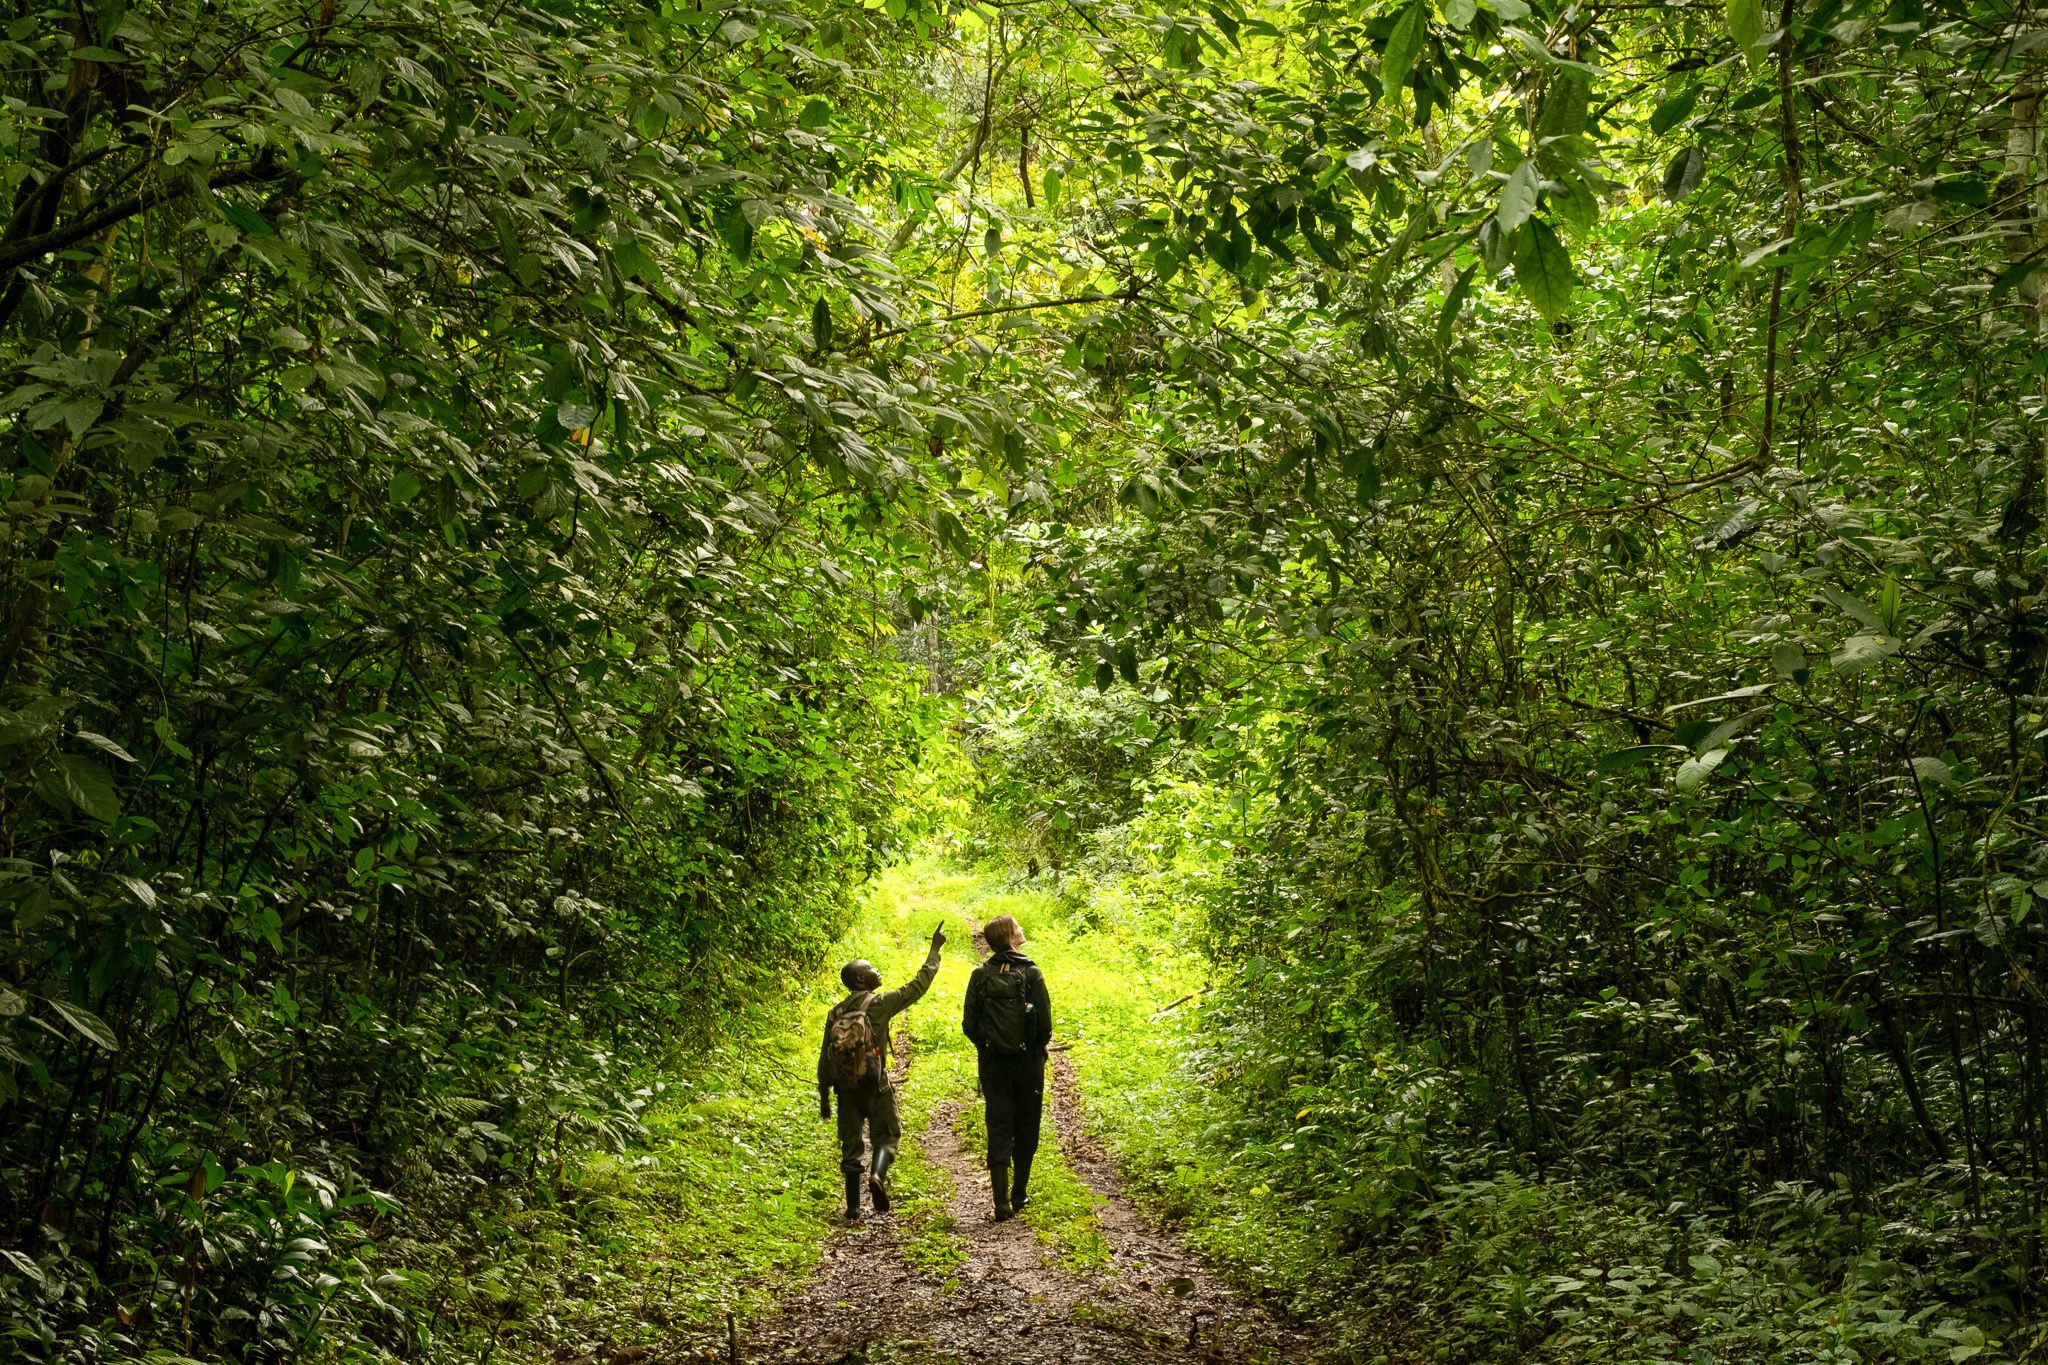 Researchers walk through a forest in Uganda